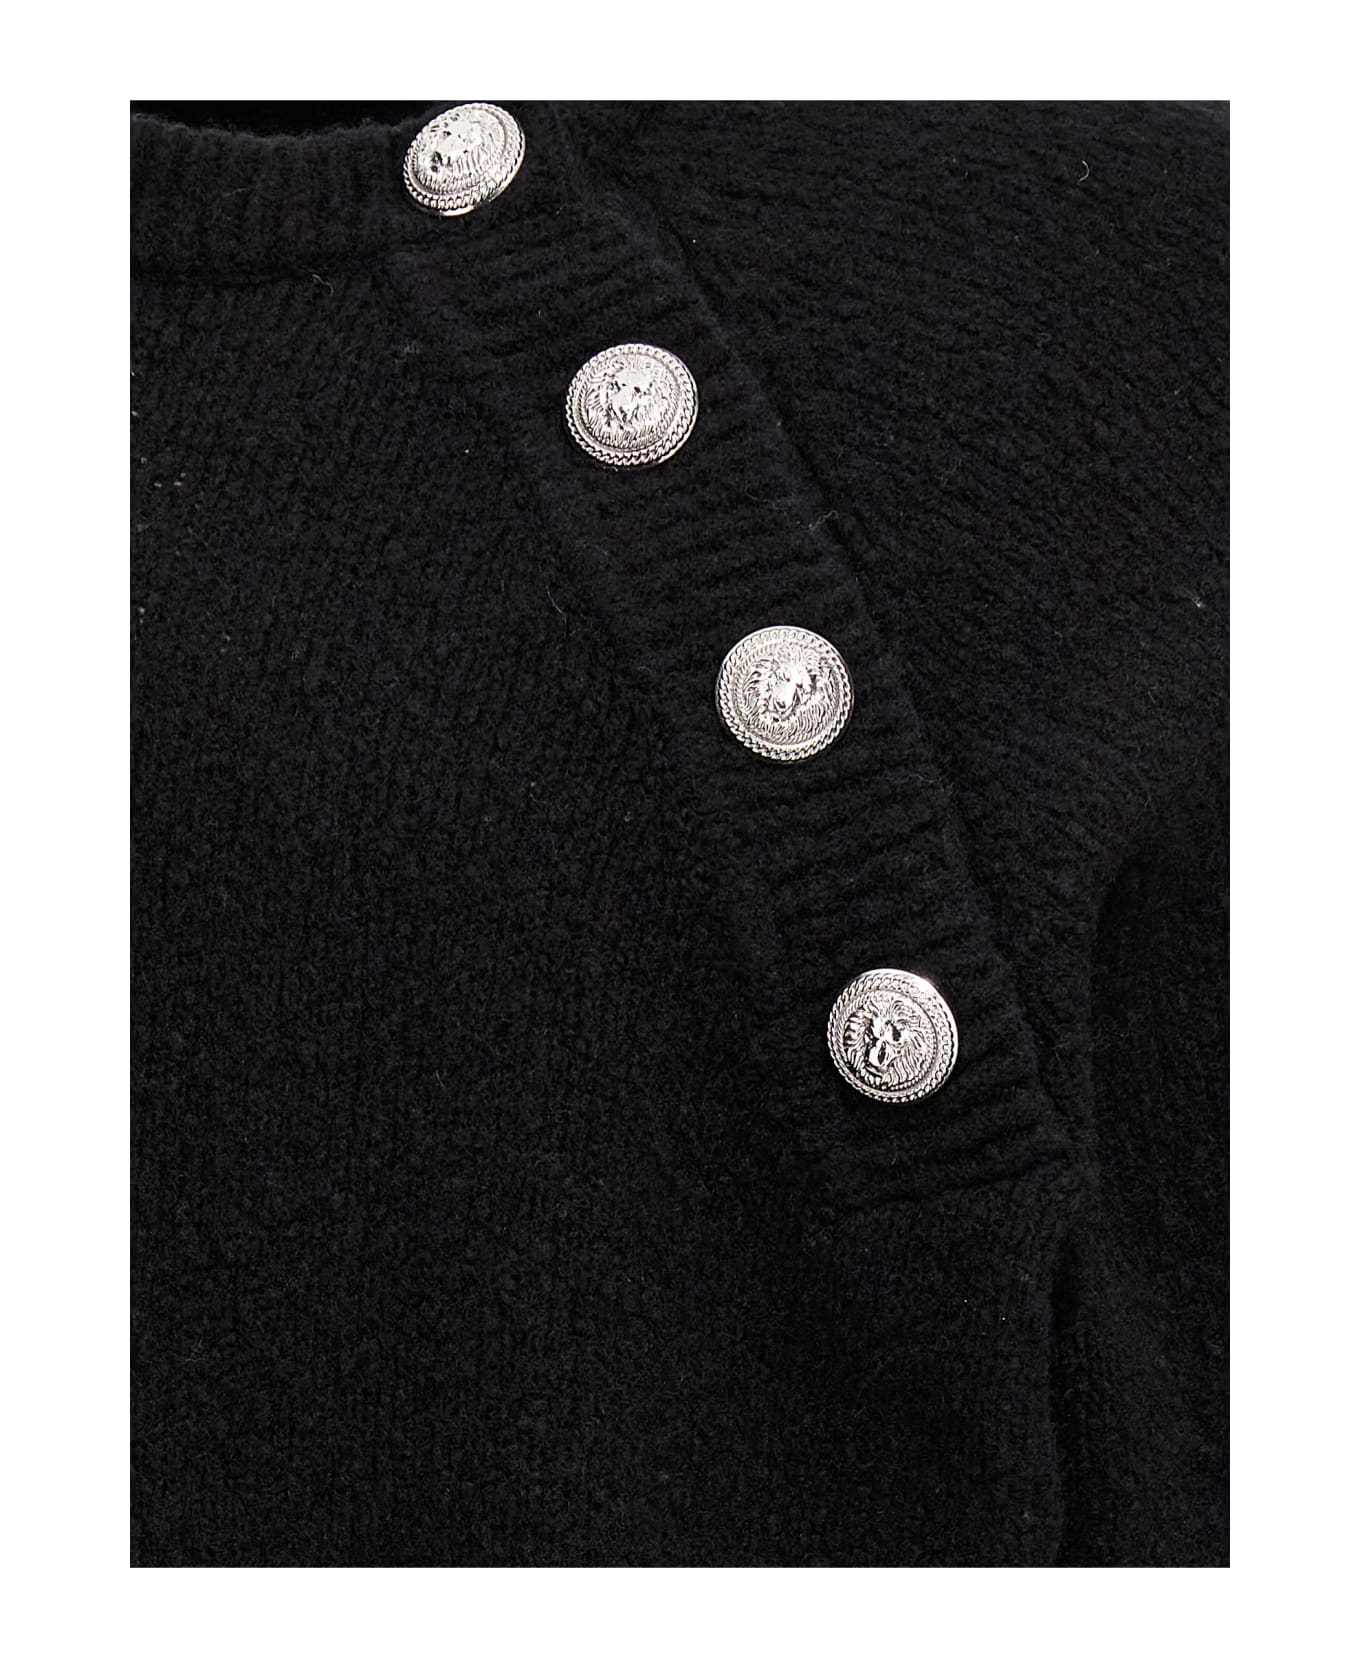 Balmain Buttoned Knit Sweater - BLACK